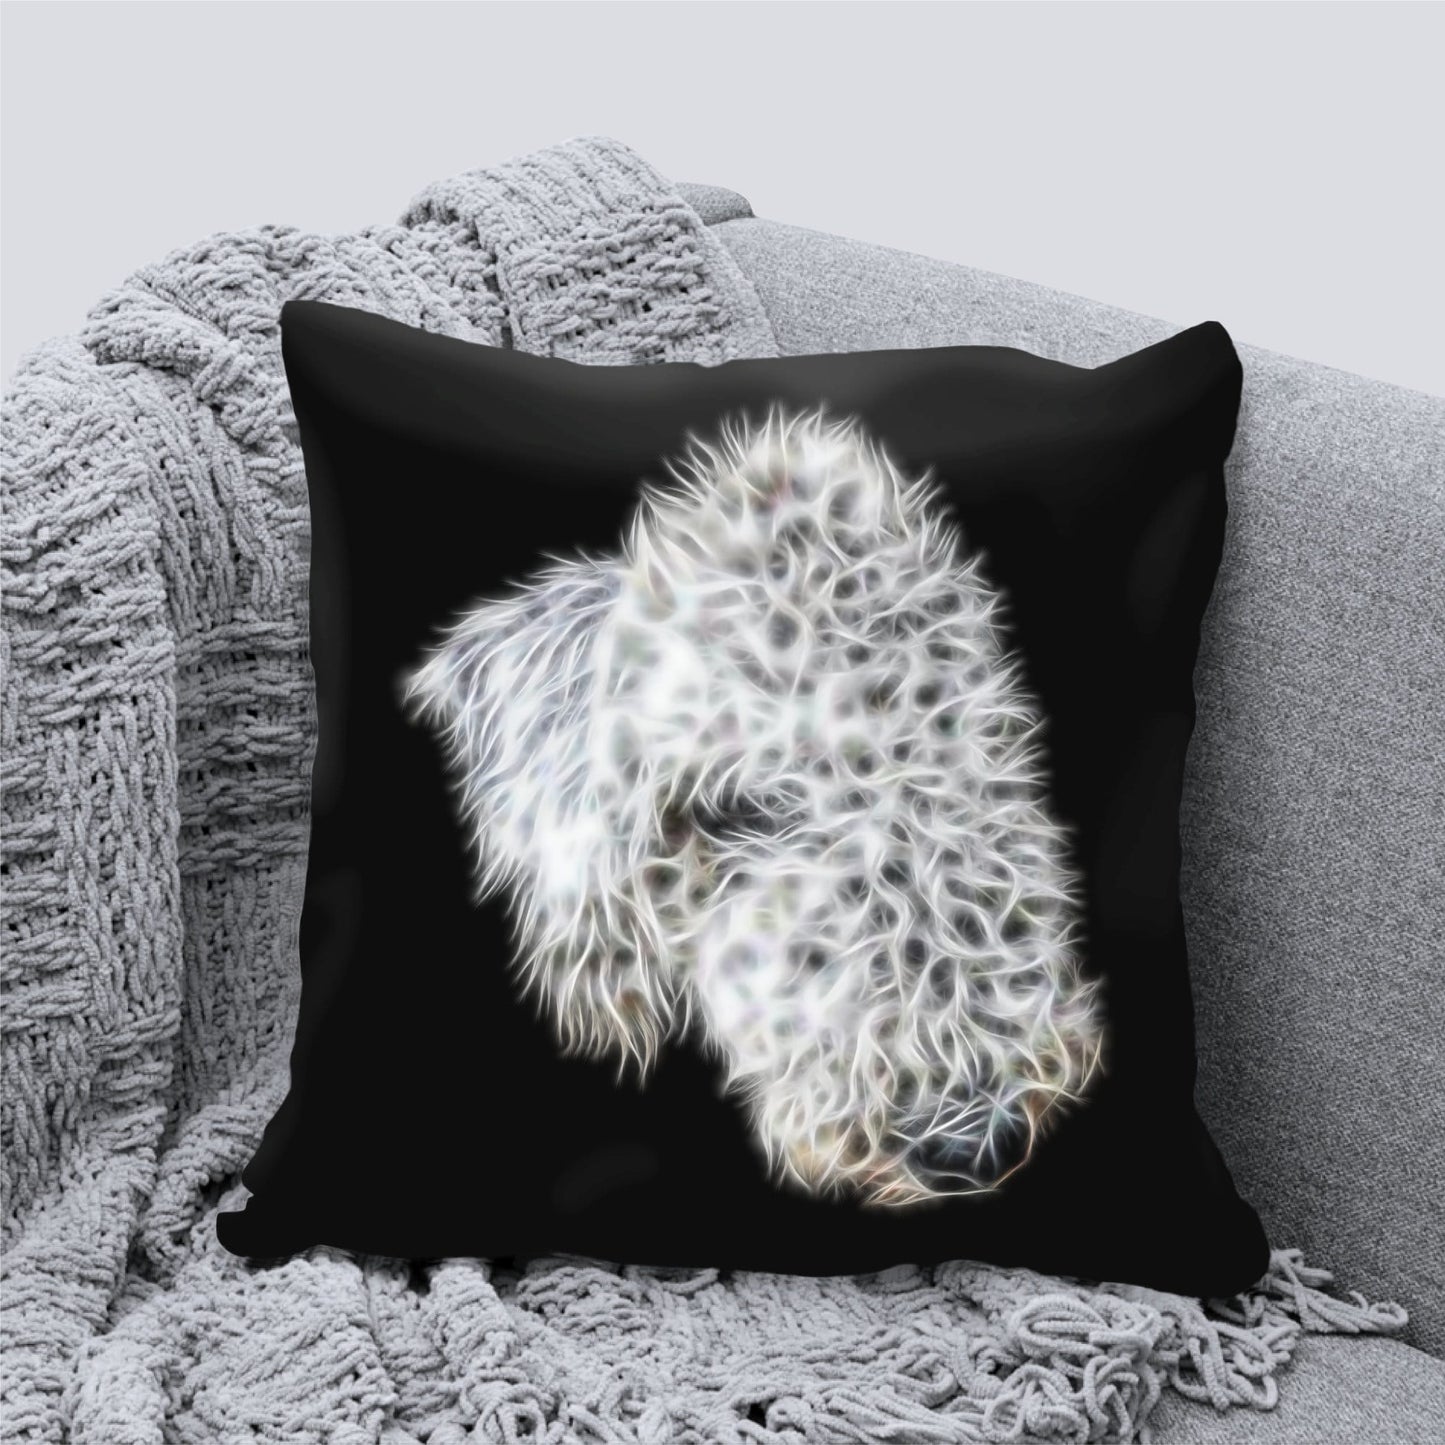 Bedlington Terrier Cushion